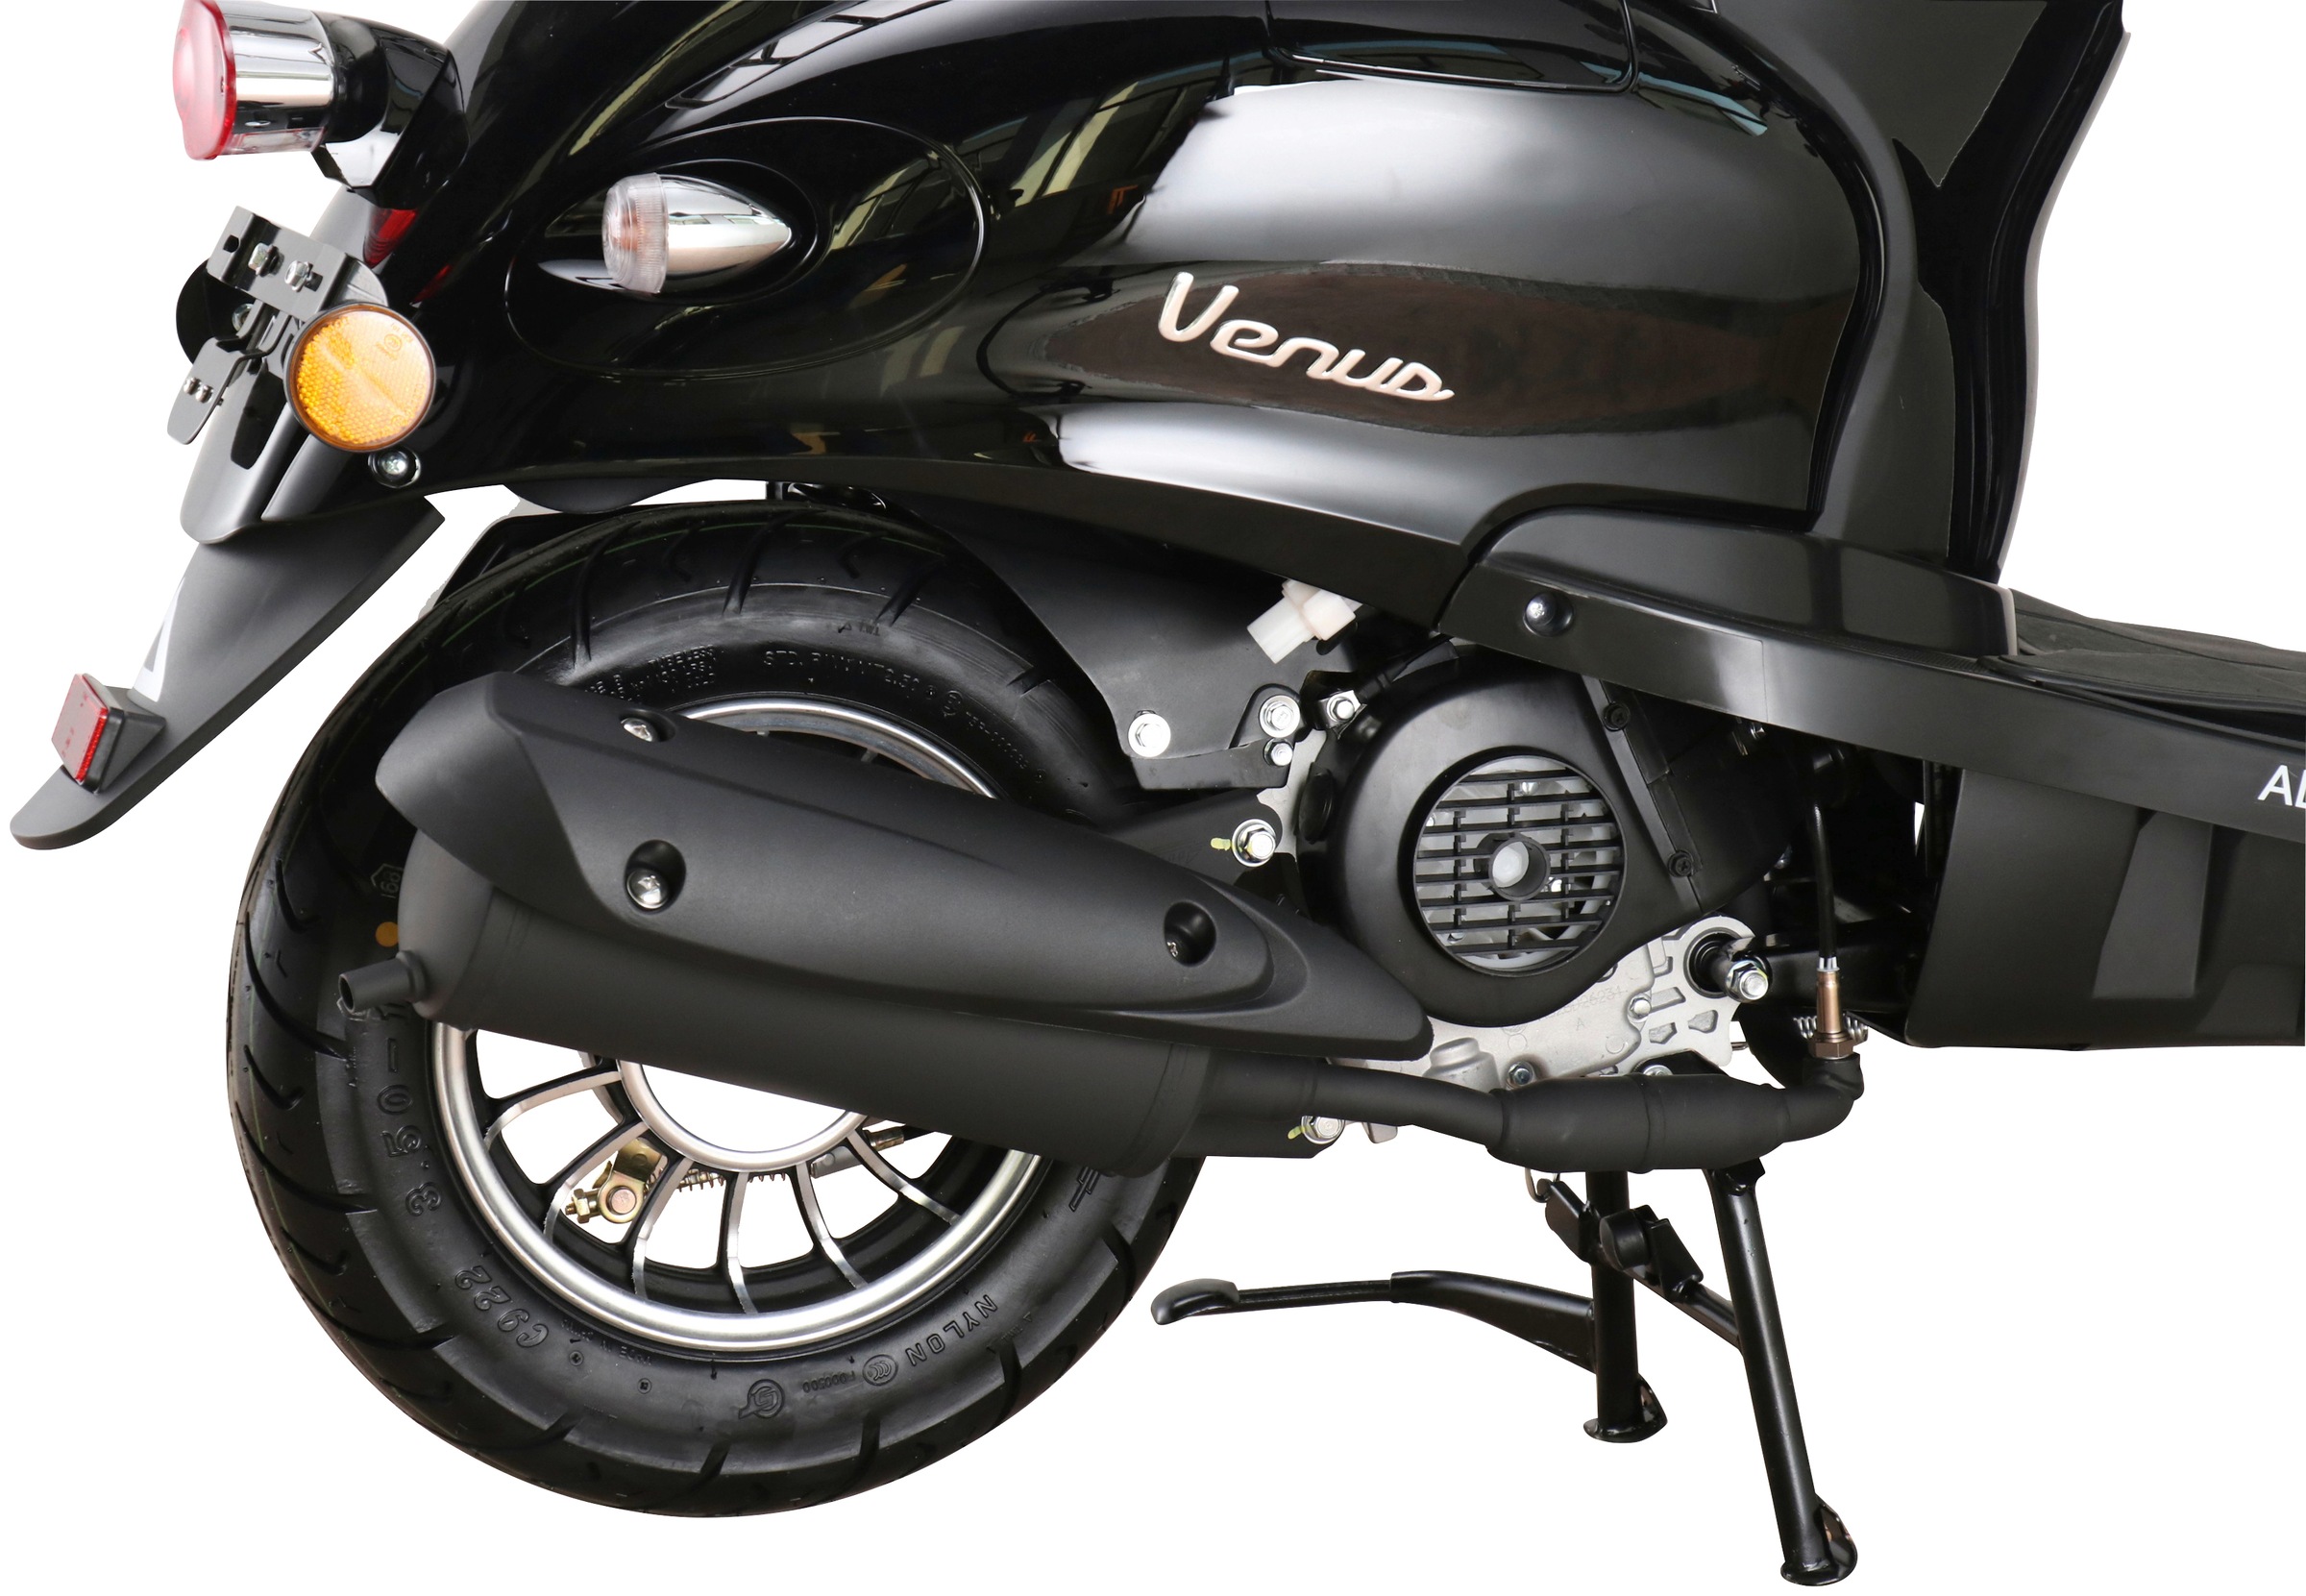 Motors %Sale Motorroller »Venus«, km/h, PS 45 2,99 im Euro cm³, 5, jetzt Alpha 50